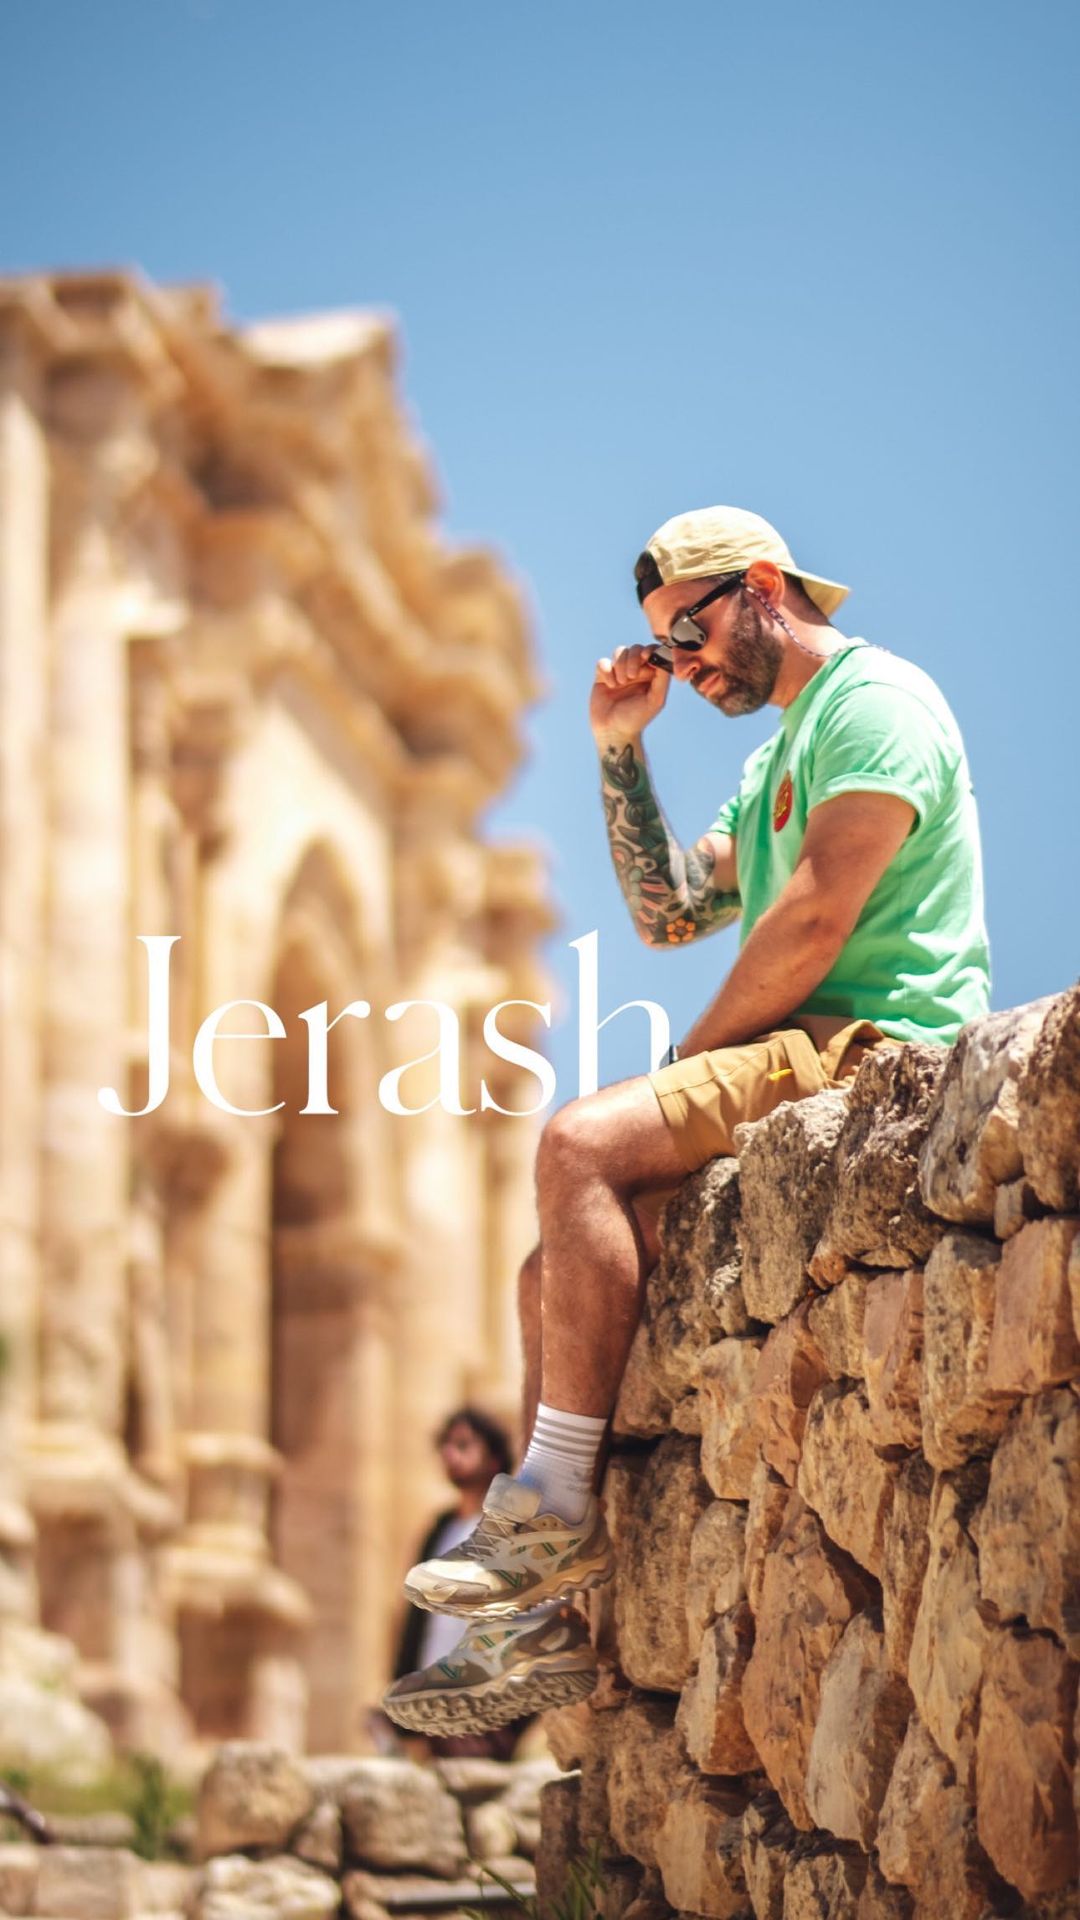 Historical Exploration of Jerash